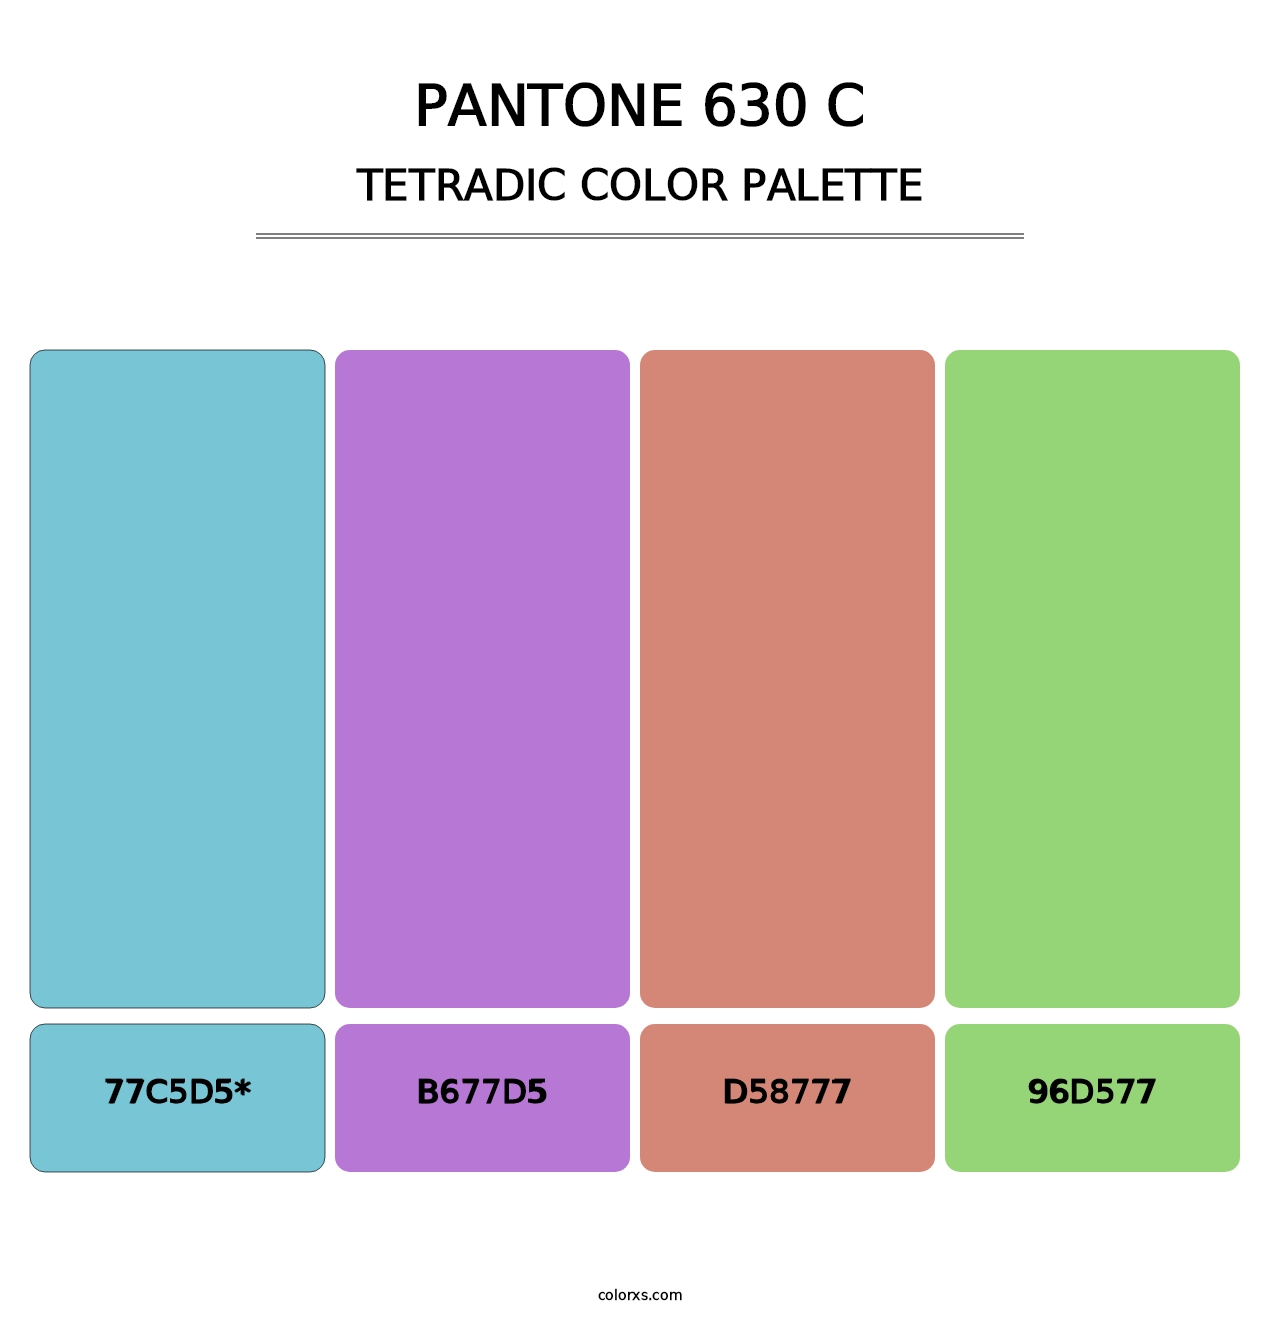 PANTONE 630 C - Tetradic Color Palette